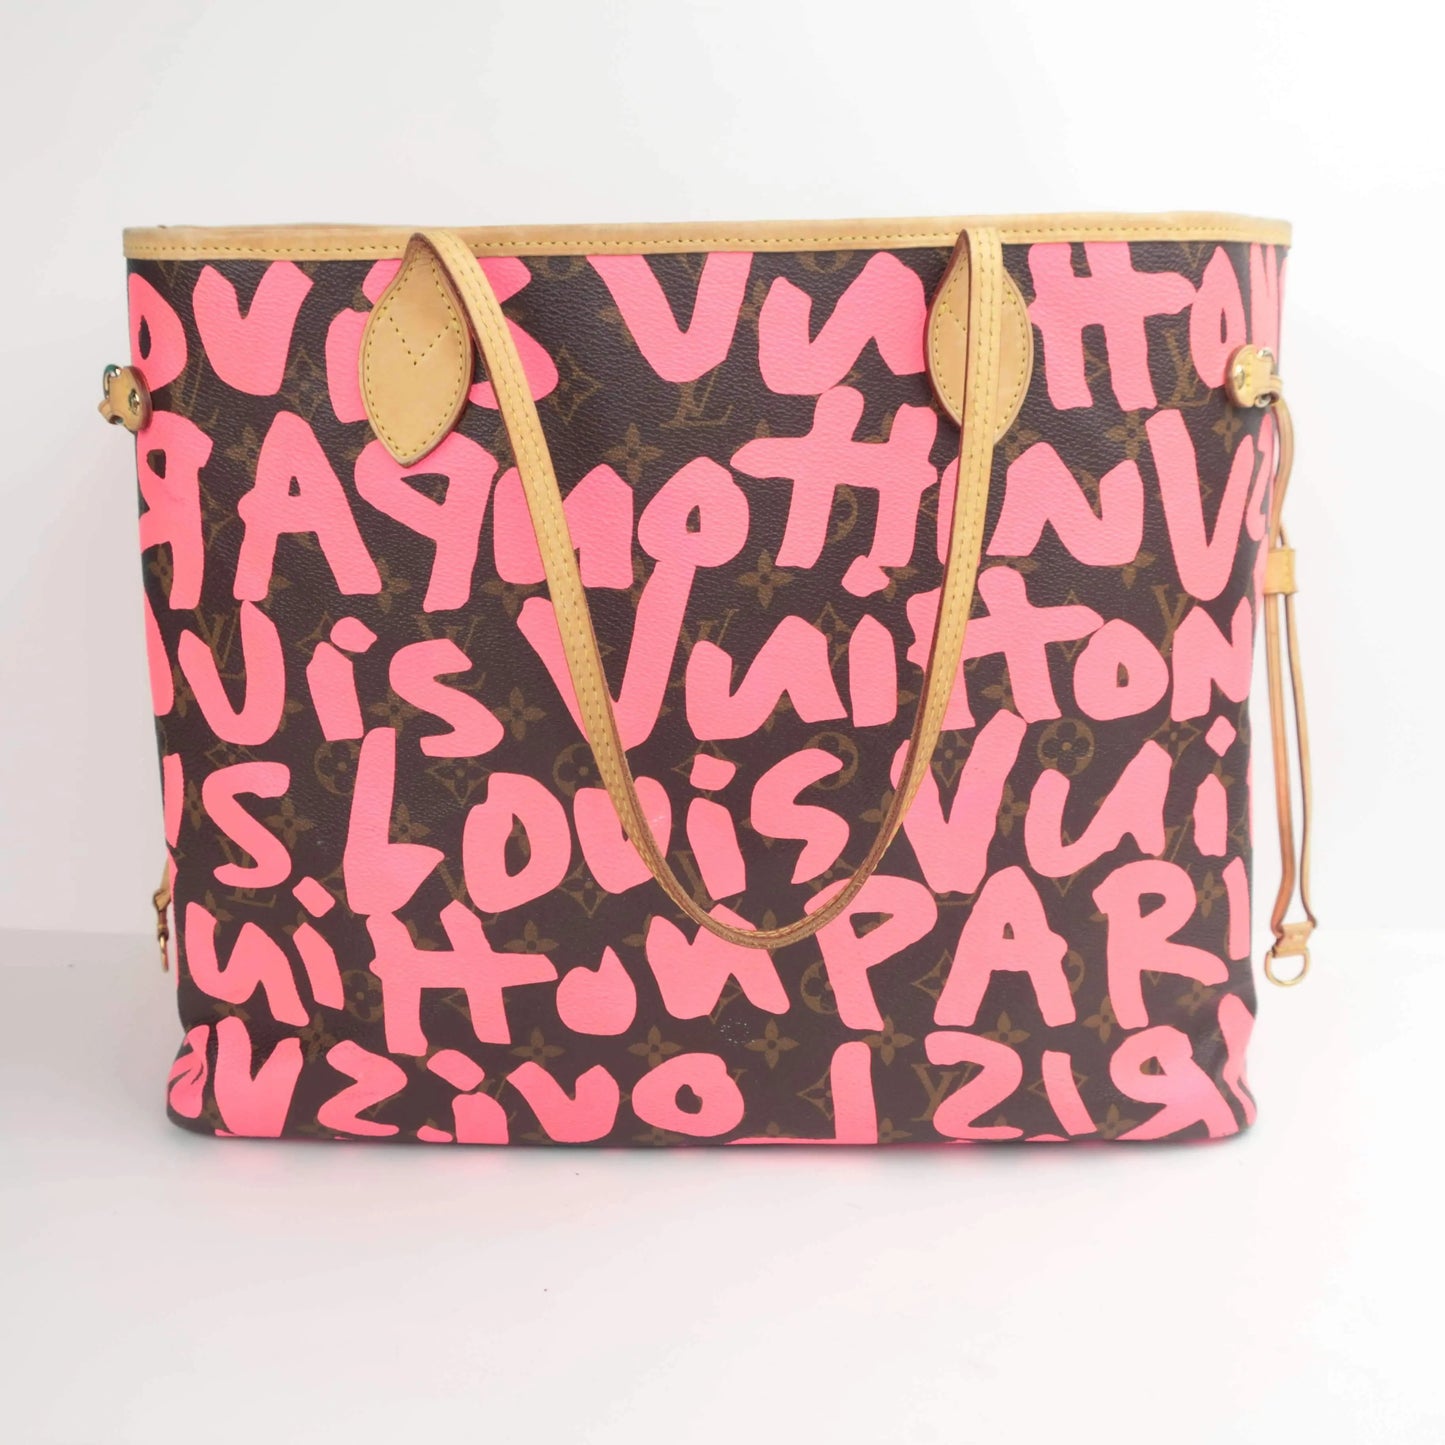 Louis Vuitton Stephen Sprouse Graffiti Neverfull GM Bag – Bagaholic